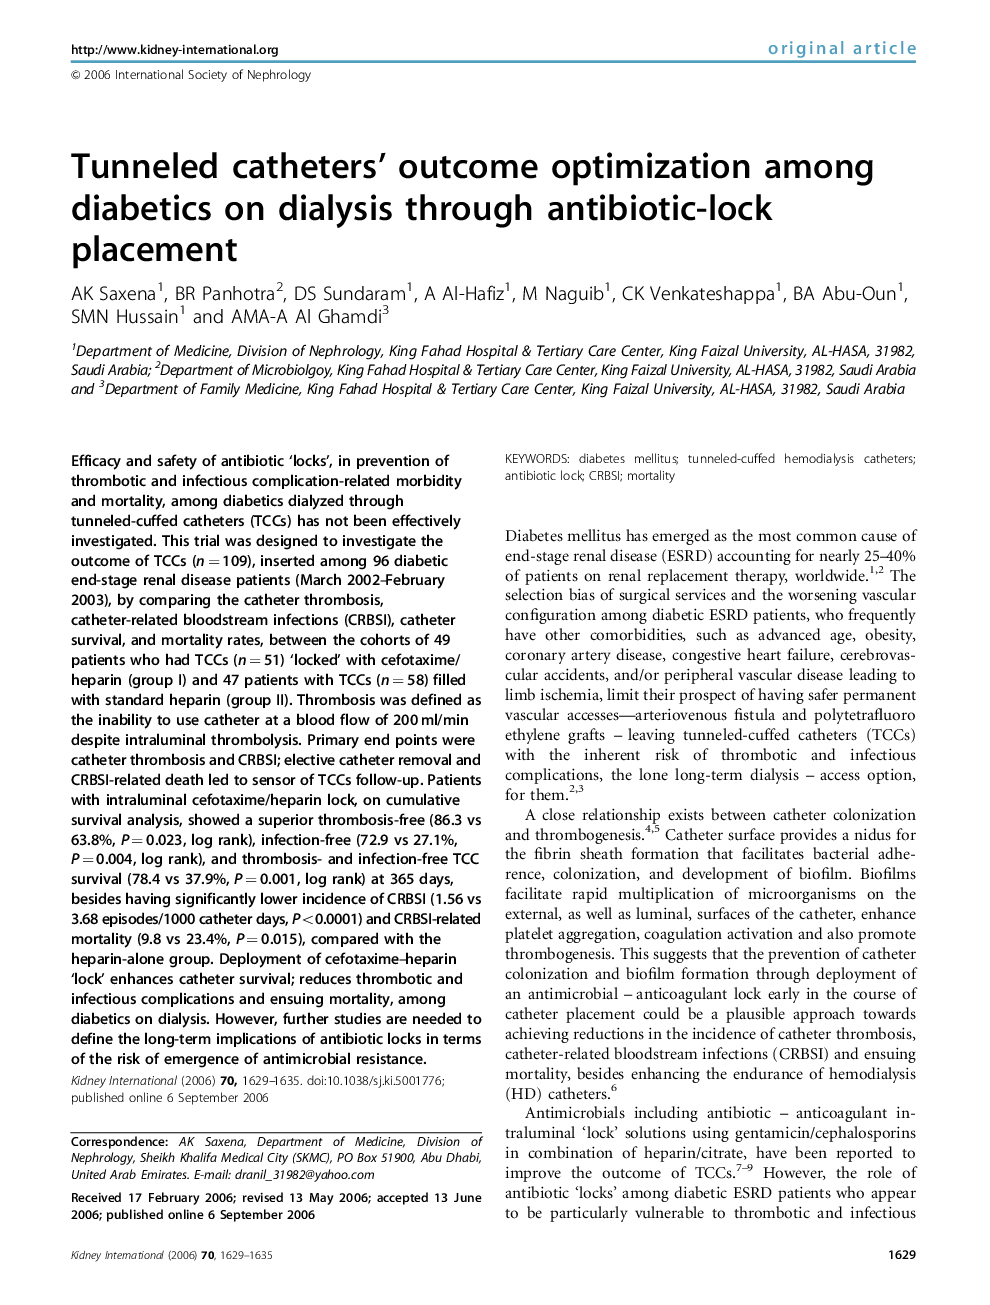 Tunneled catheters' outcome optimization among diabetics on dialysis through antibiotic-lock placement